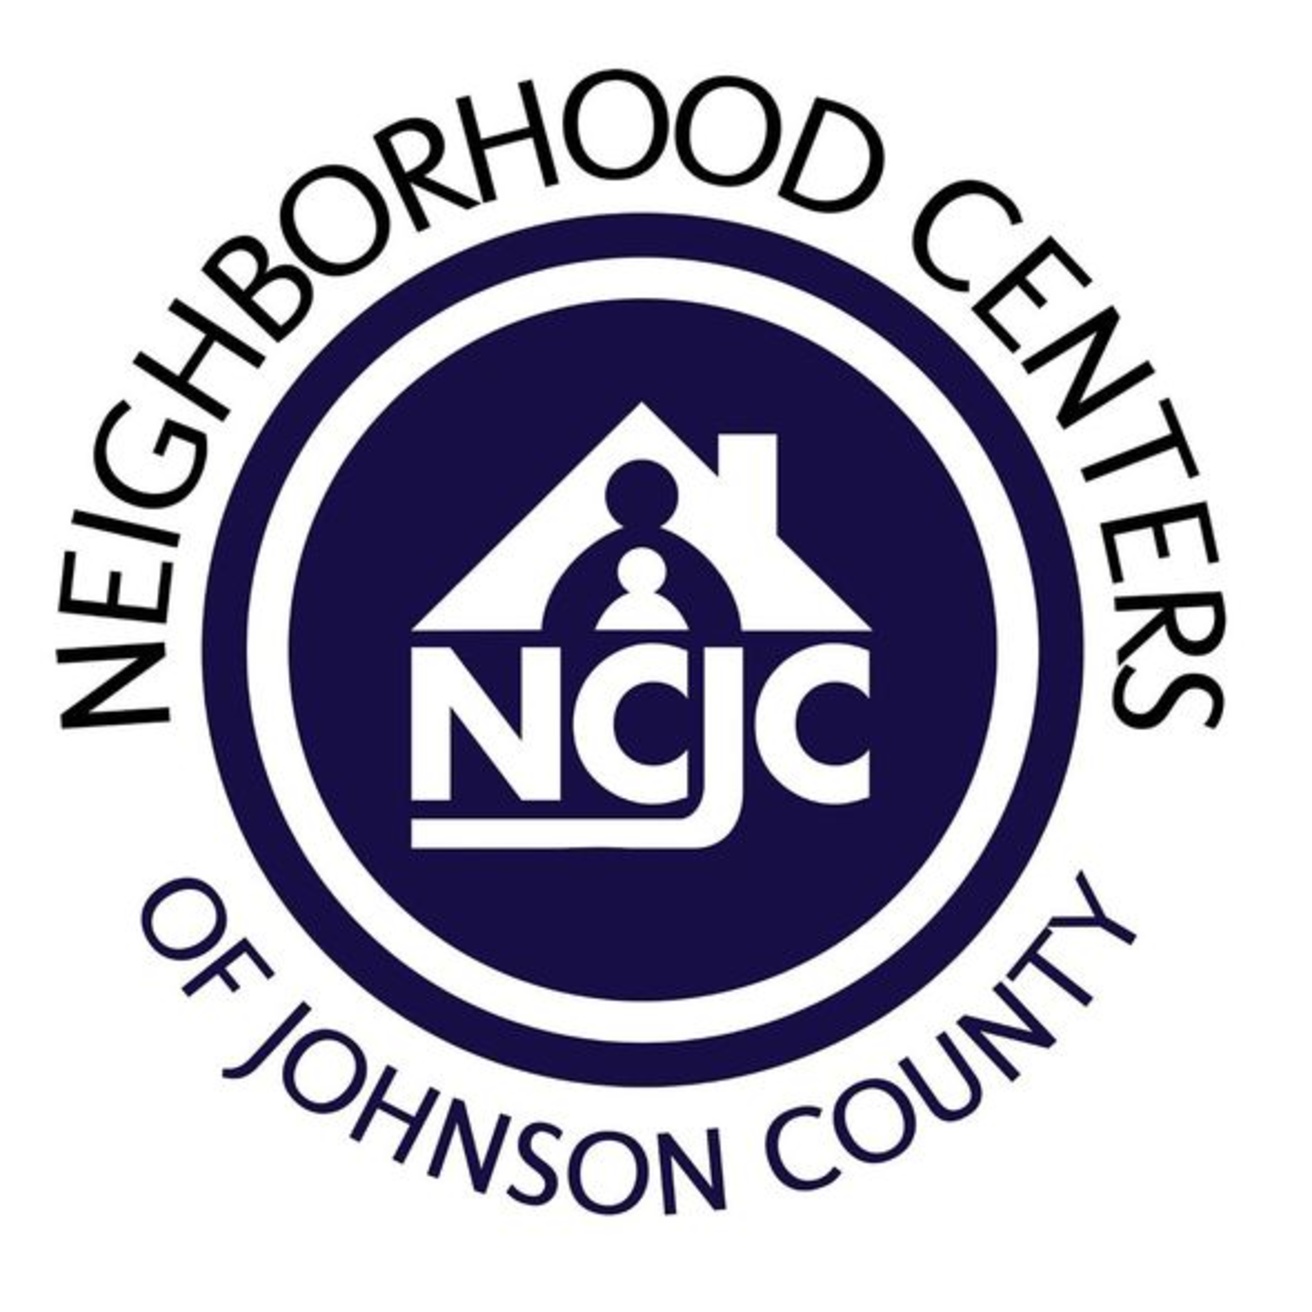 Neighborhood Centers of Johnson County